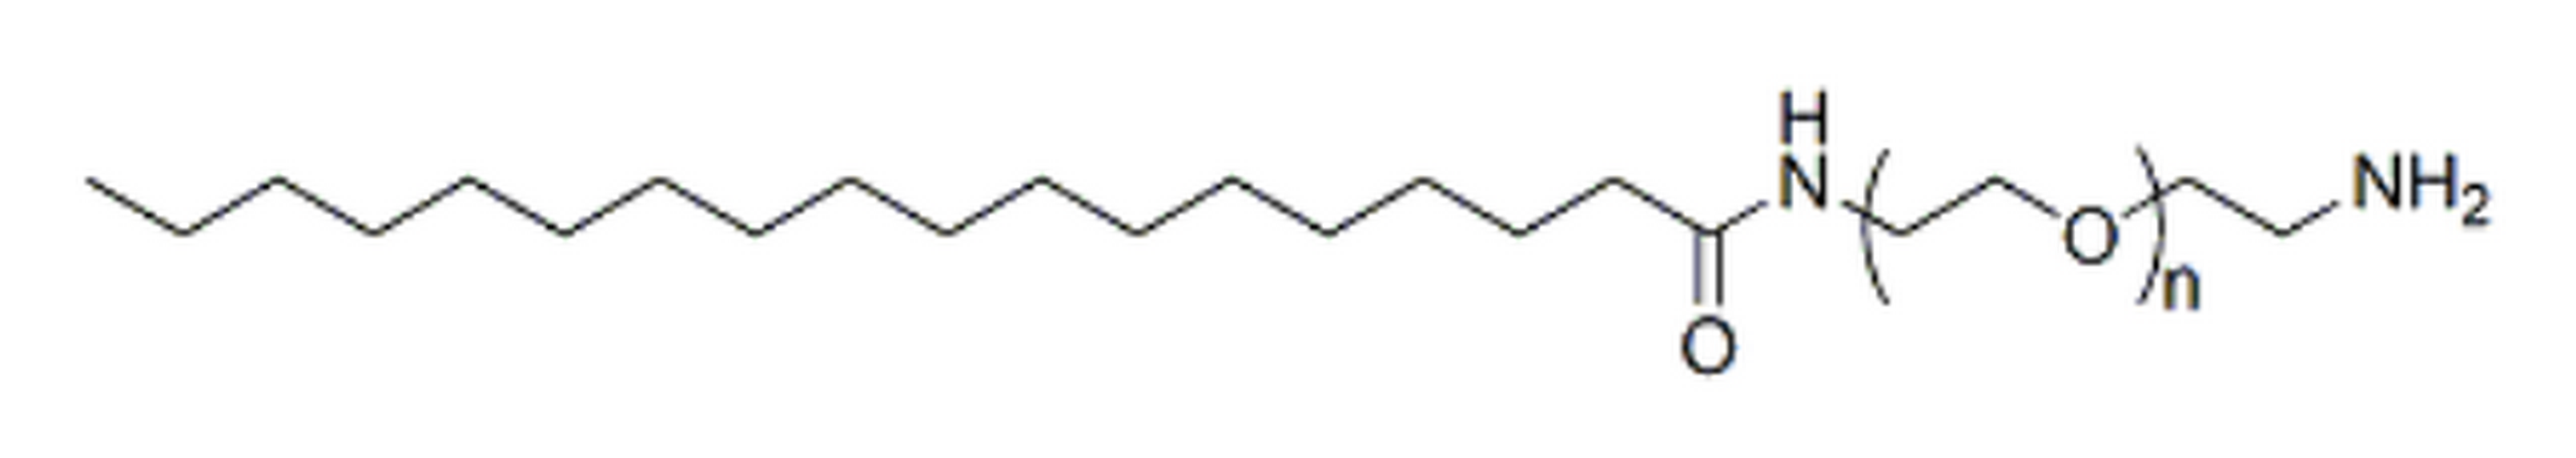 Stearic acid-PEG-amine, MW 5K